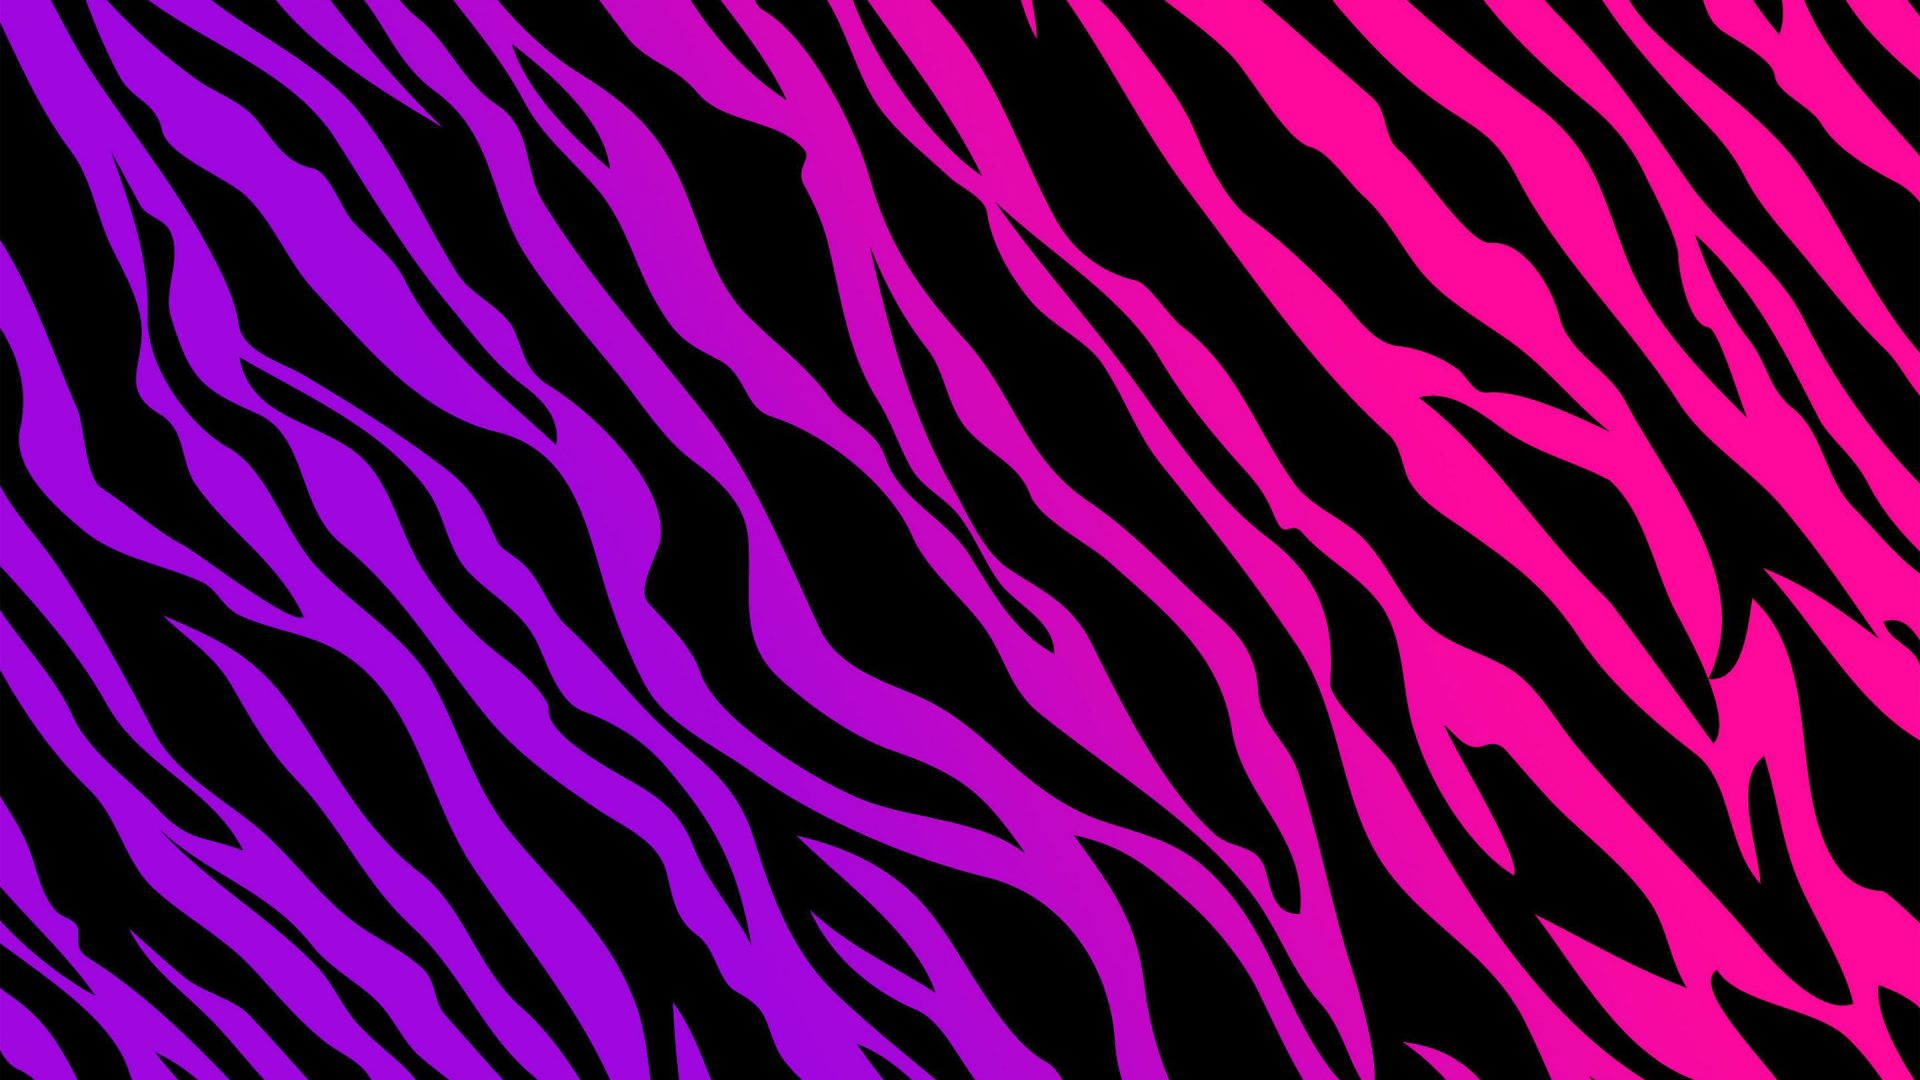 Leopard Print Wallpaper For Desktop